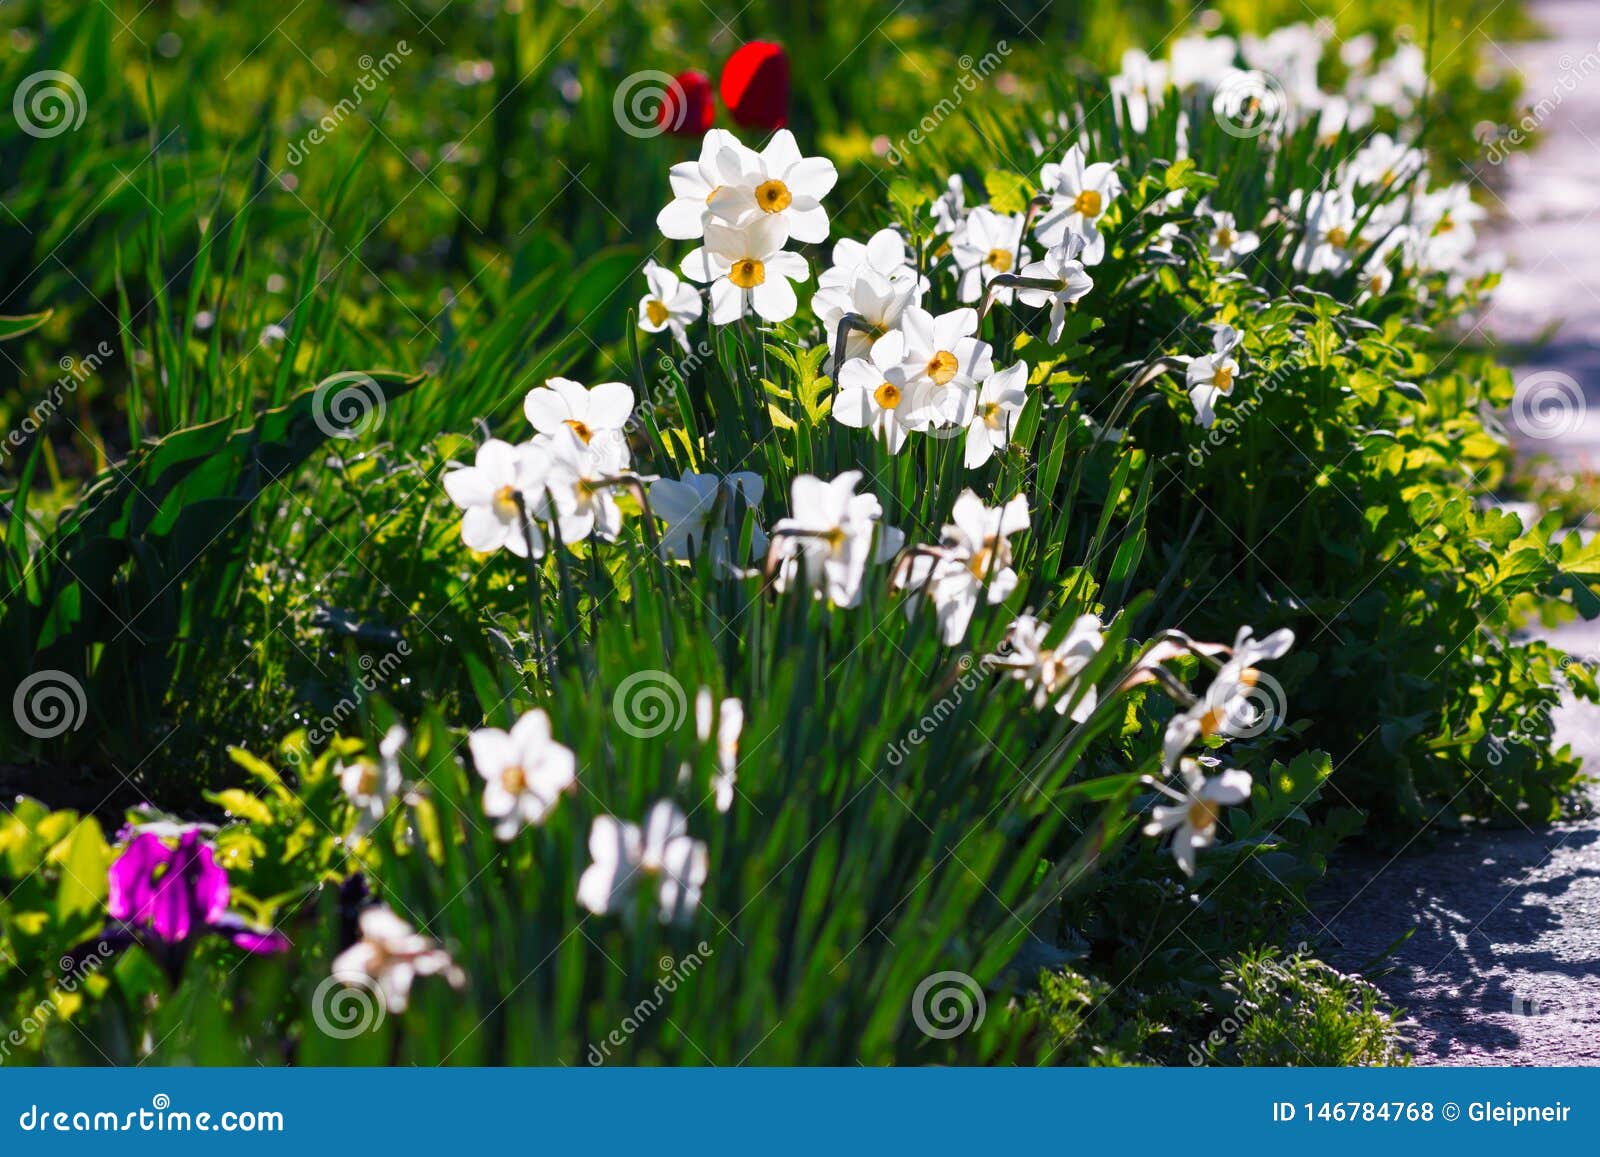 Symbol of Spring Revival and False Pride ï¿½ Narcissus Flowers ...